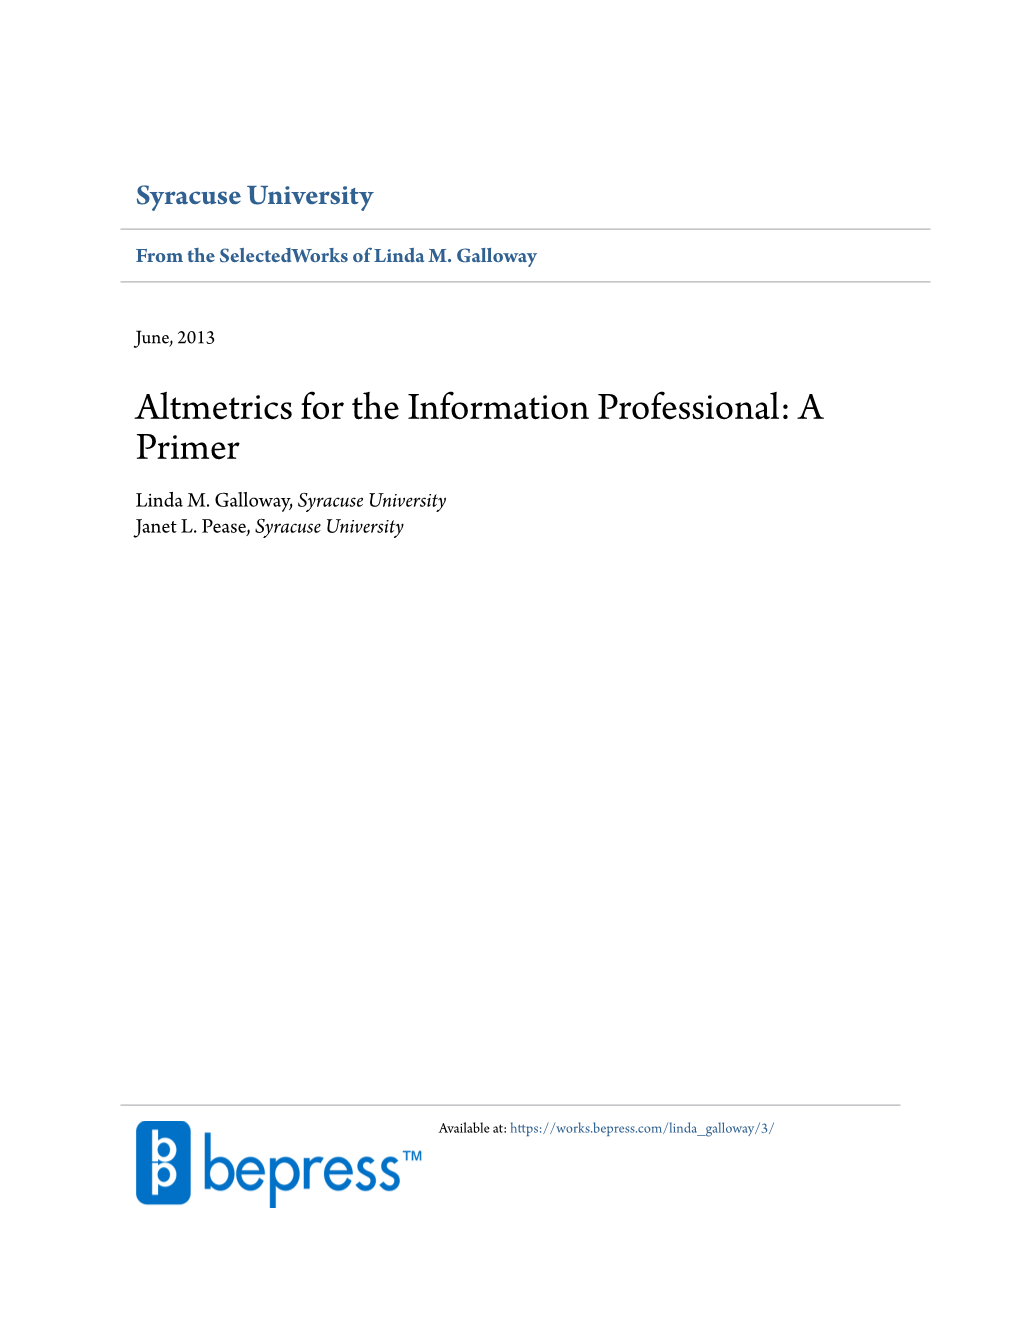 Altmetrics for the Information Professional: a Primer Linda M